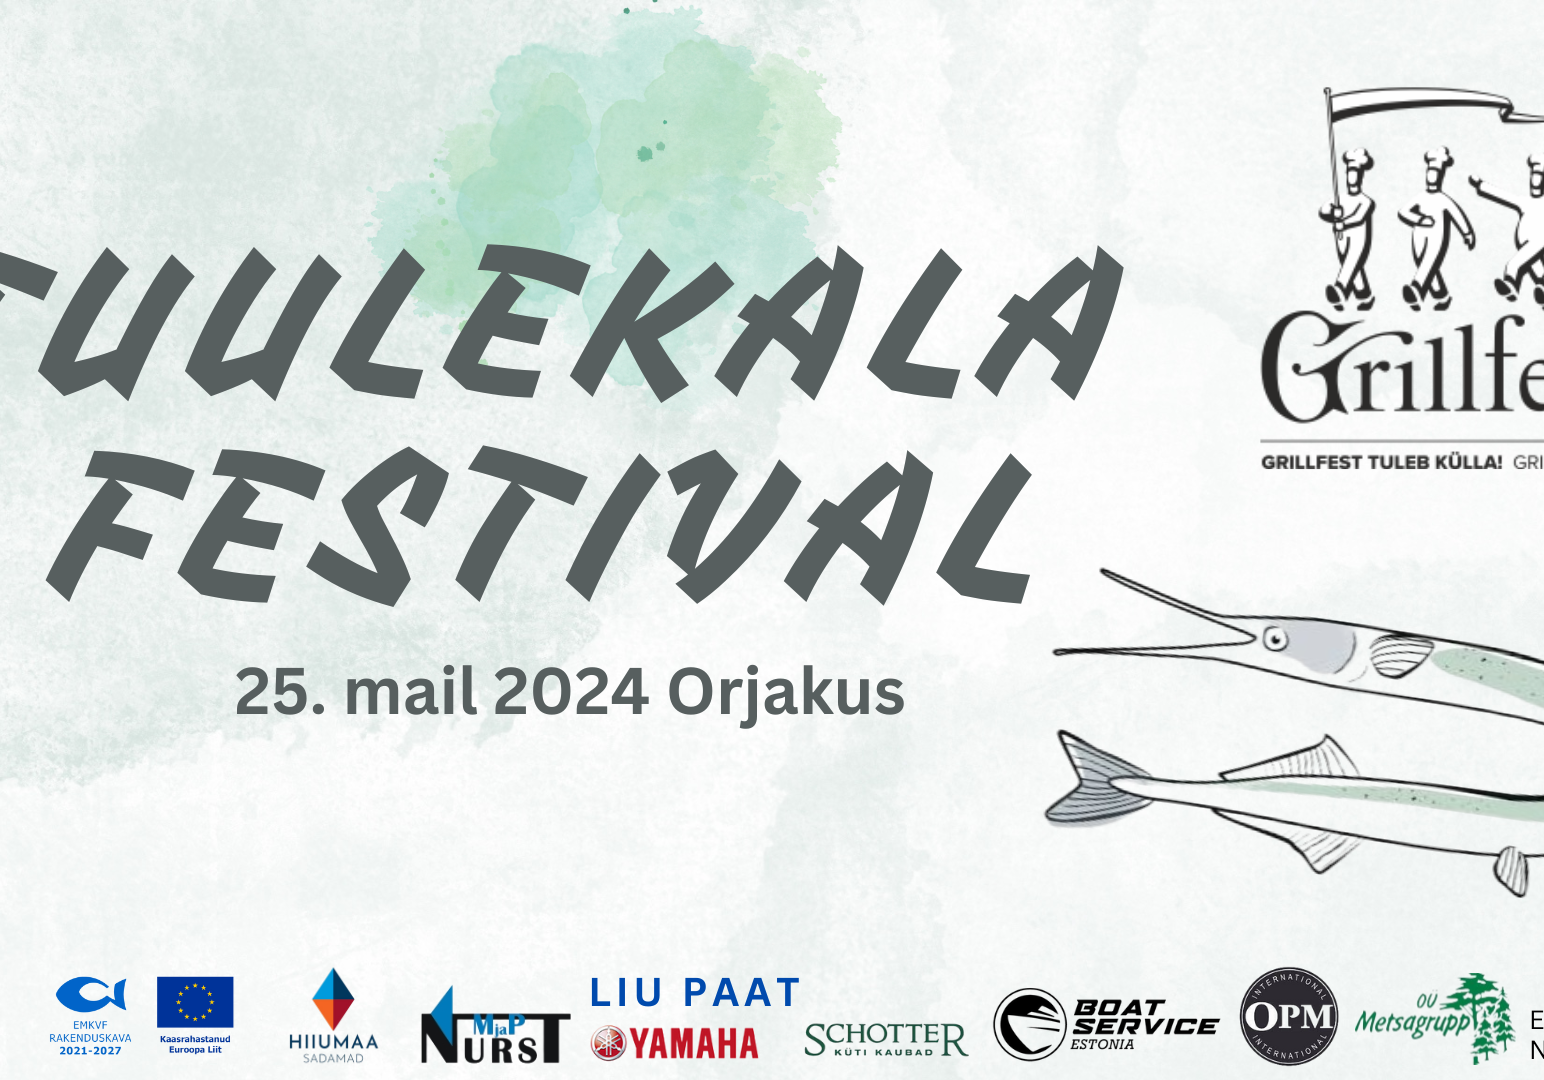 Tuulekala festival (1920 x 1080 px)